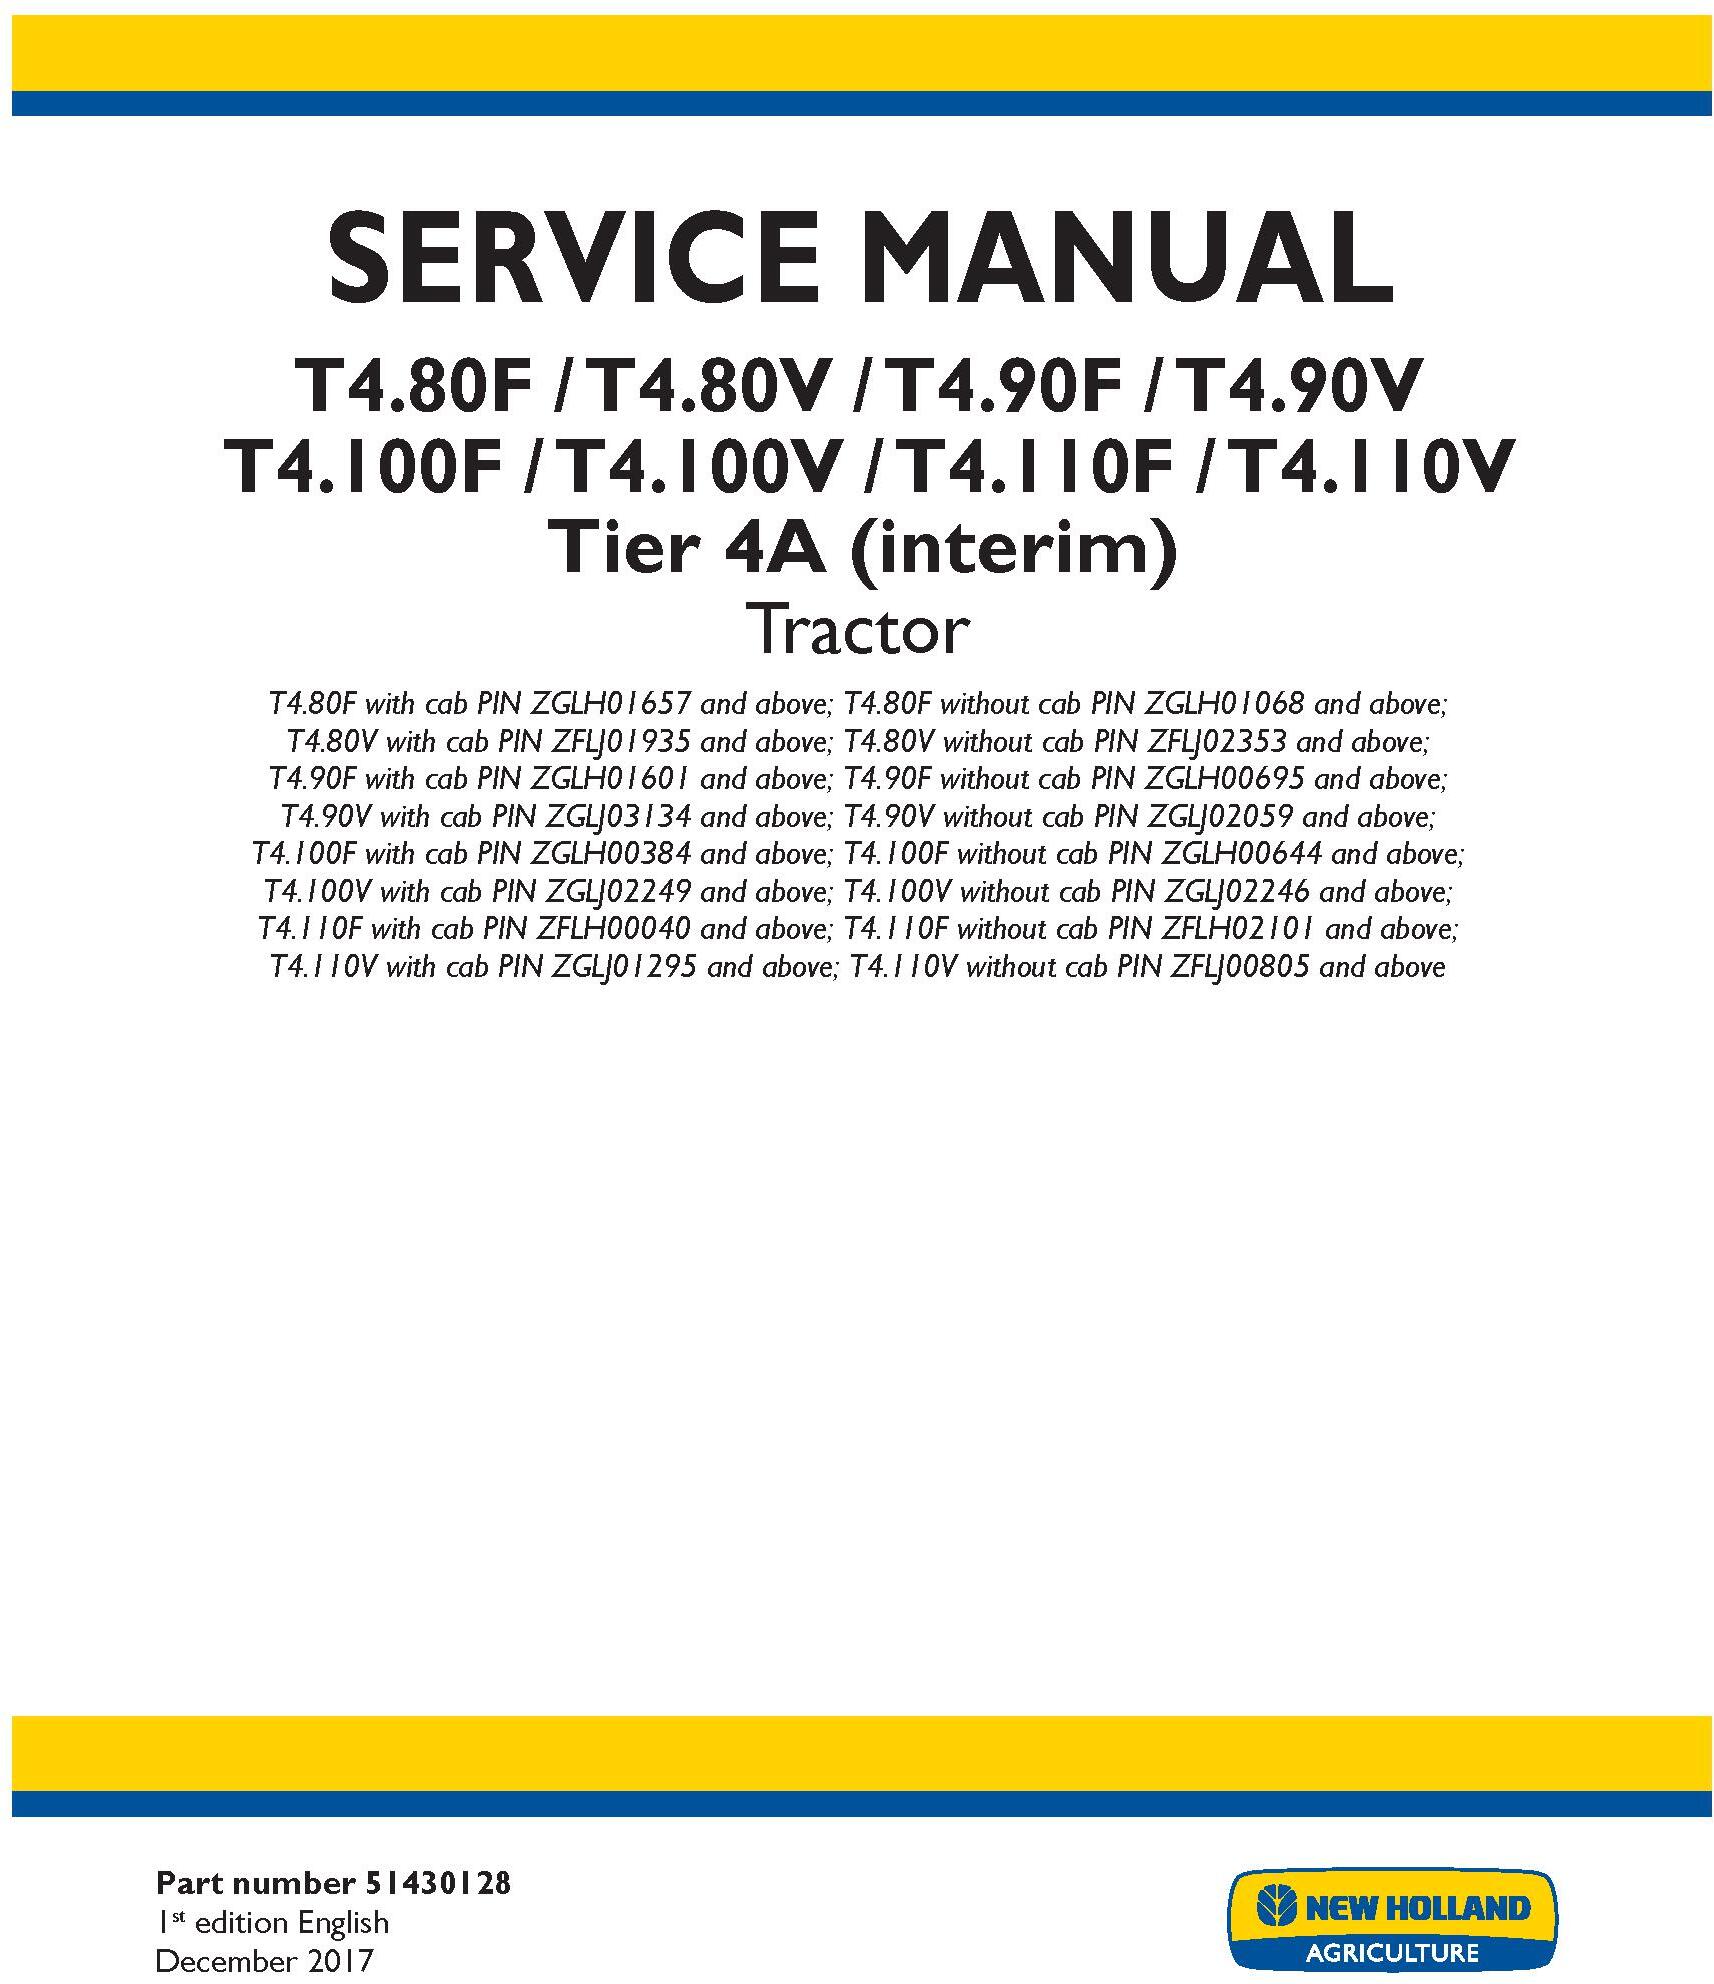 New Holland T4.80F, T4.80V, T4.90F, T4.90V, T4.100F, T4.100V, T4.110F,T4.110V Tractor Service Manual - 19511